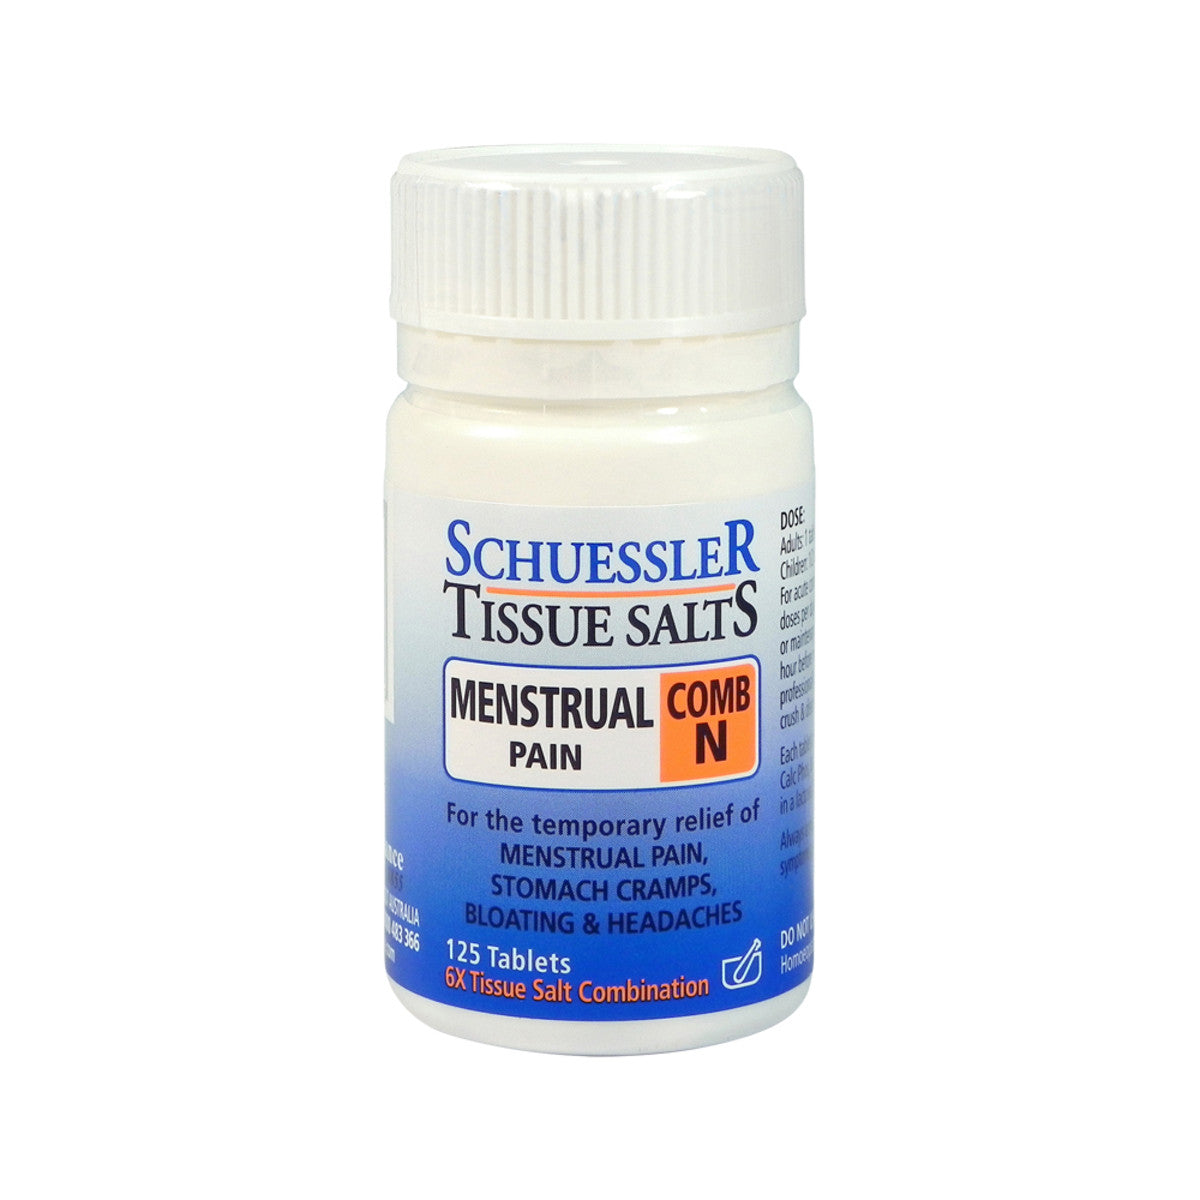 Schuessler Tissue Salts Comb N (Menstrual Pain) 125t